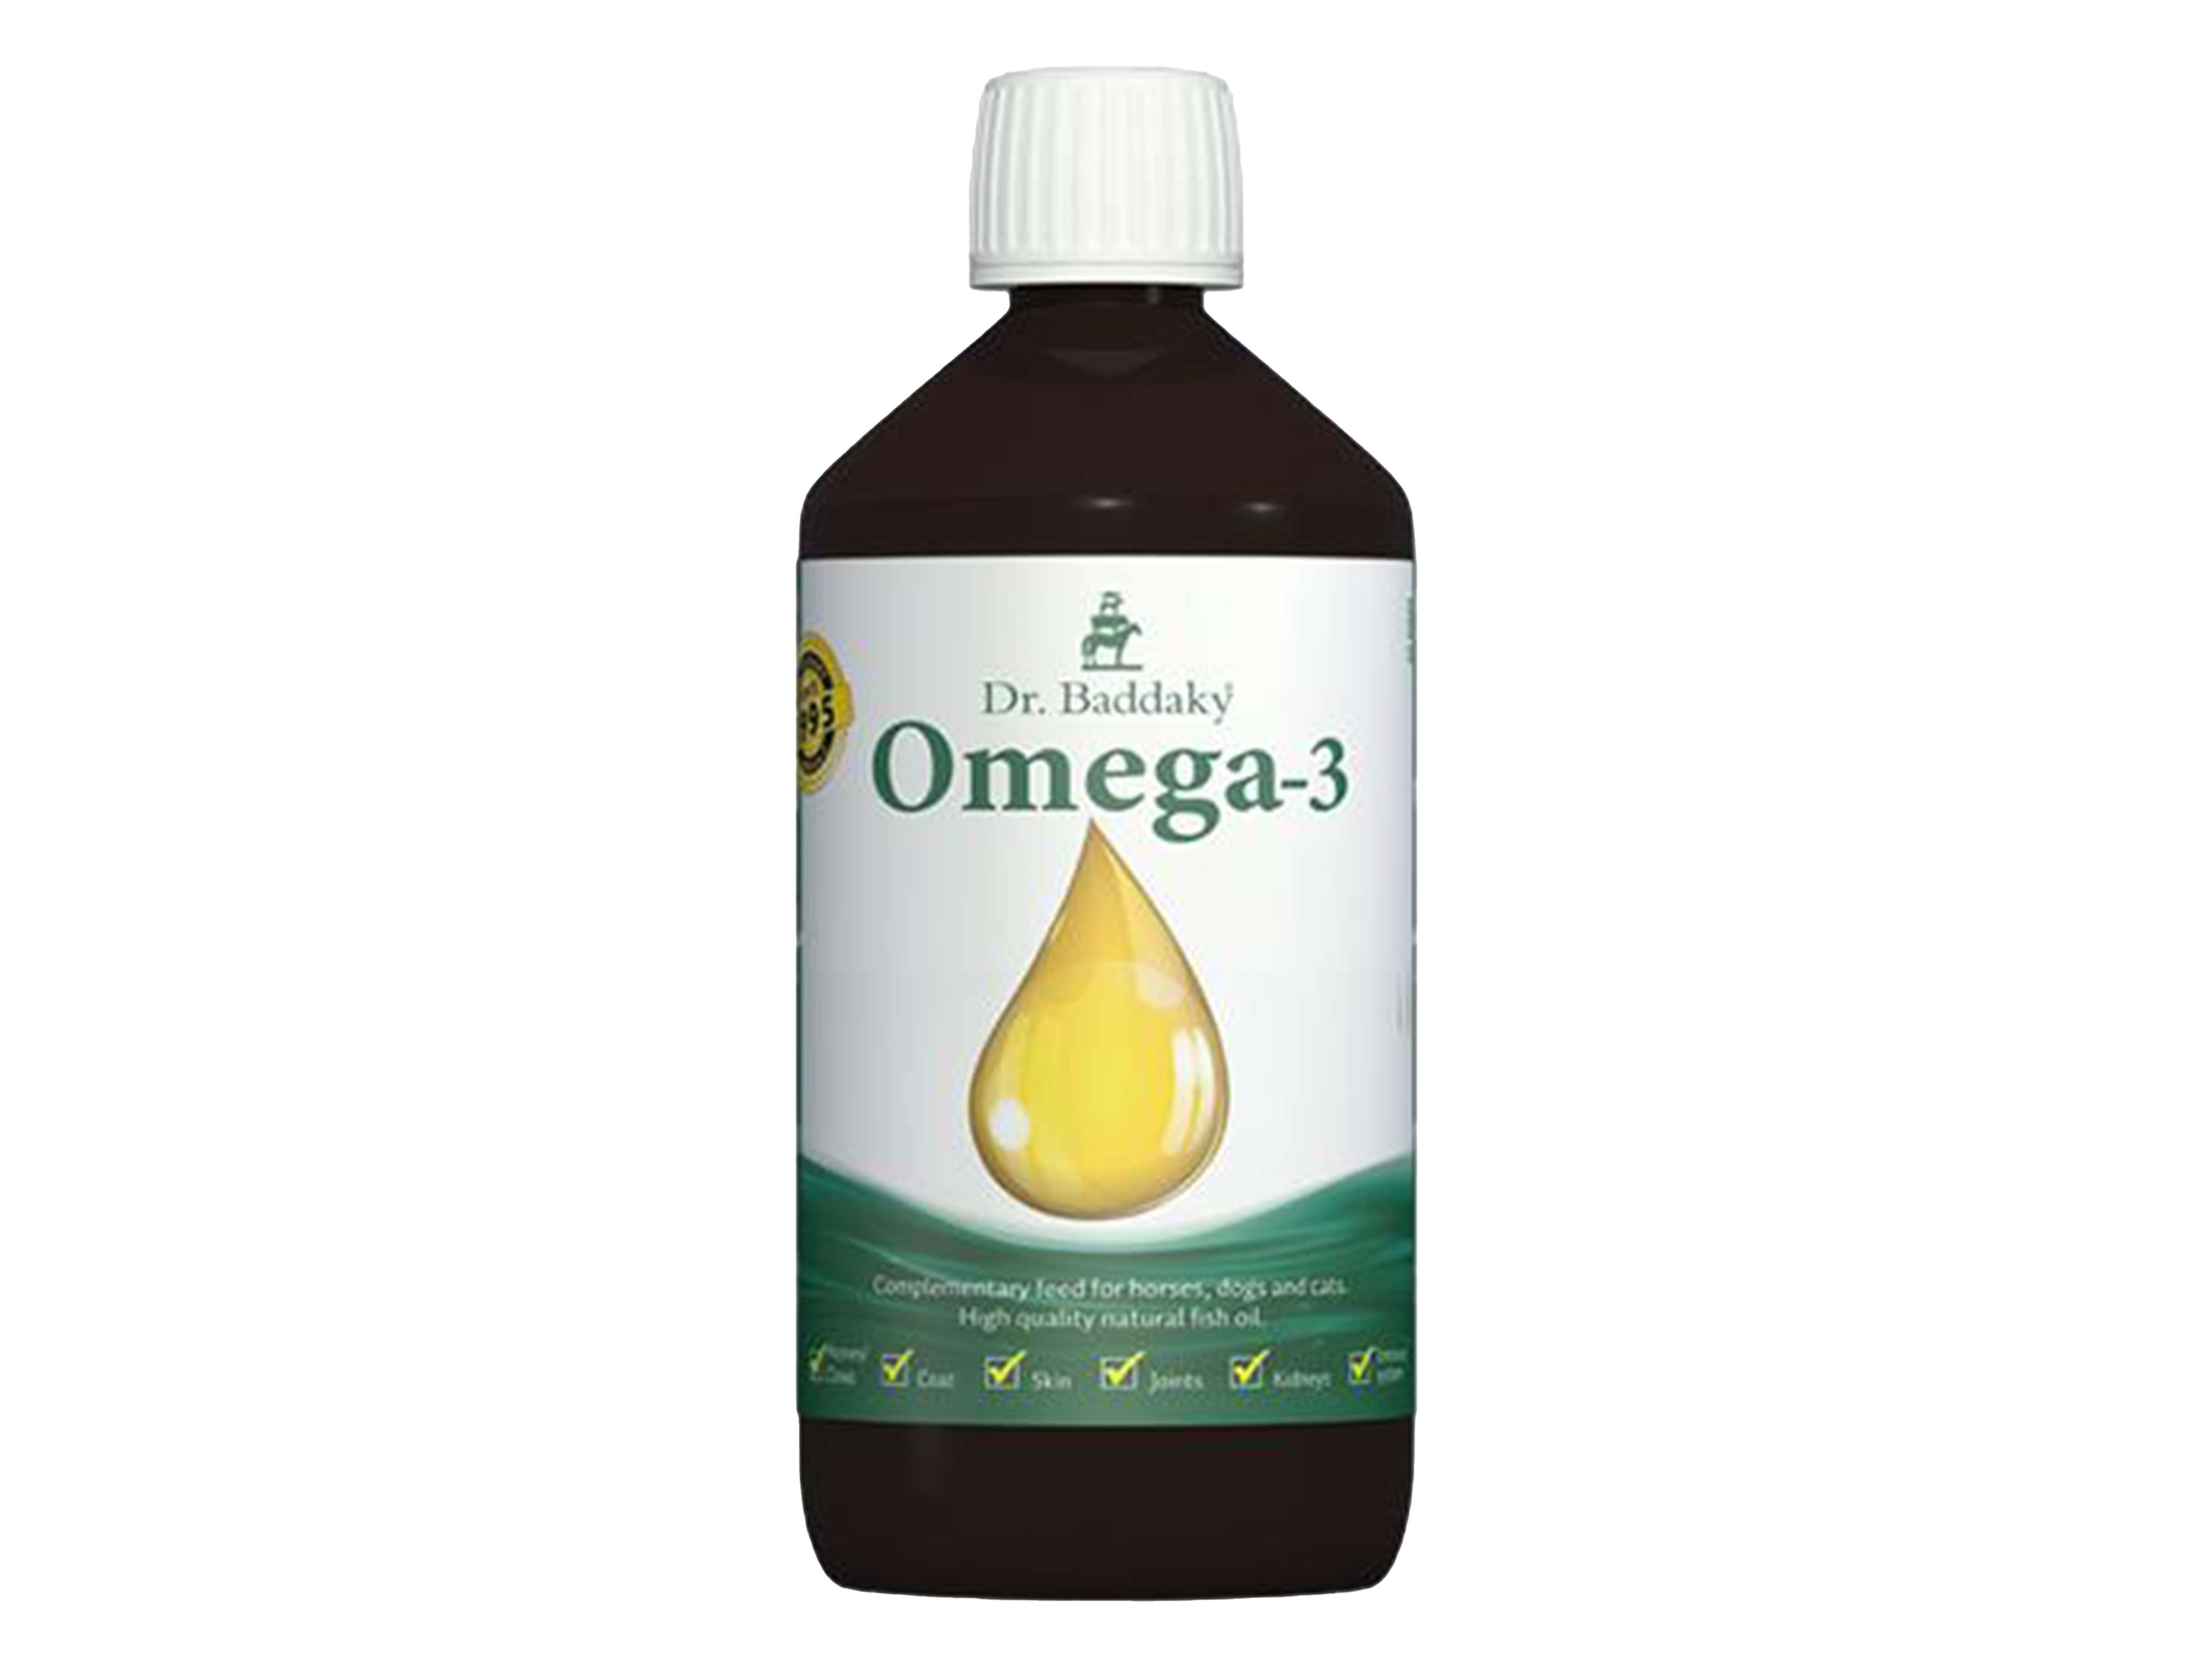 Dr Baddaky Omega-3, 1000 ml